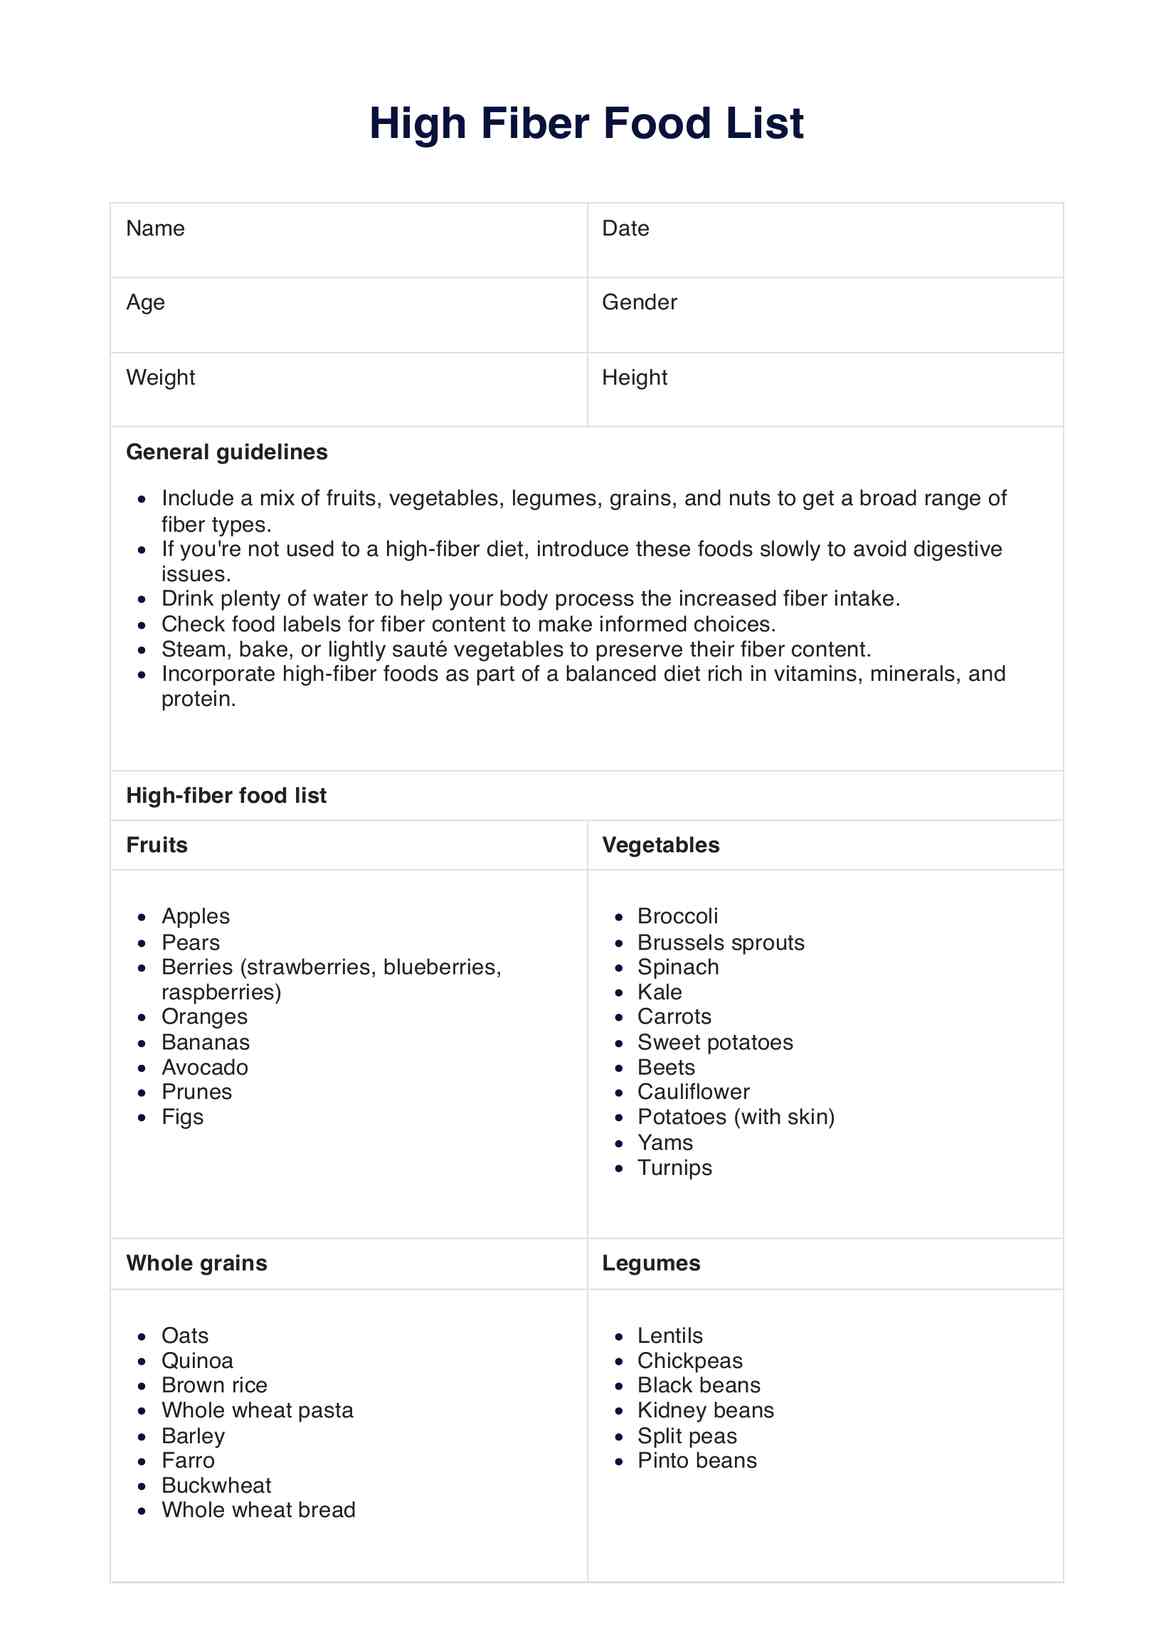 High Fiber Foods PDF Example